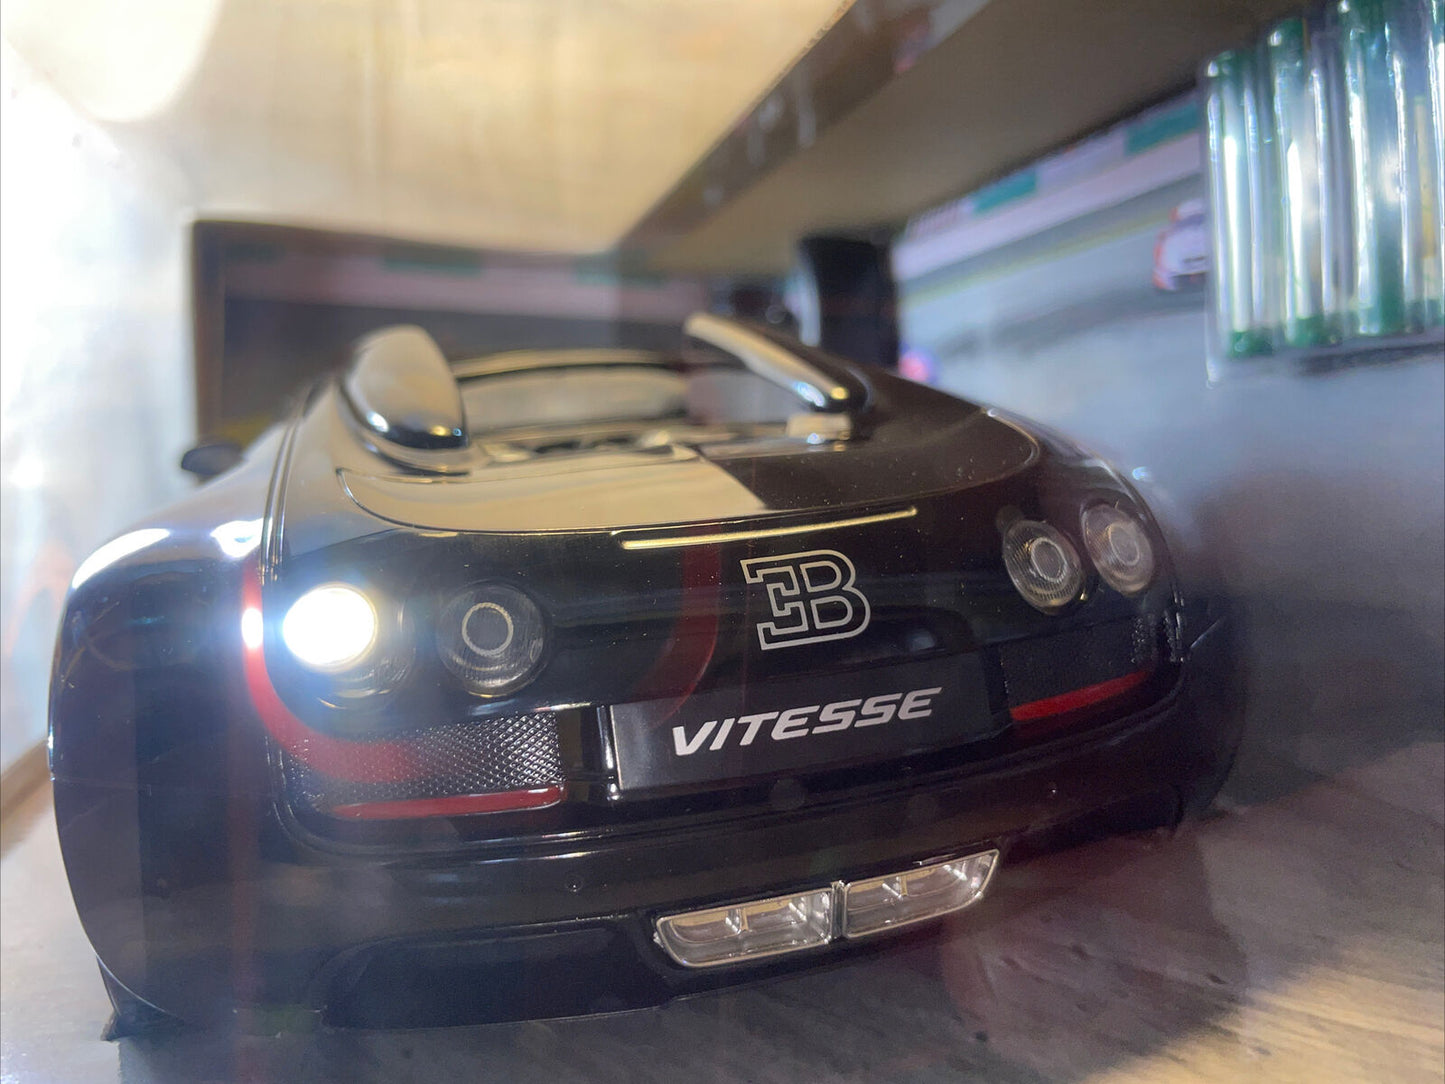 1:14 Scale Rastar RC Bugatti Veyron 16.4 Grand Sport Vitesse Remote Control Car